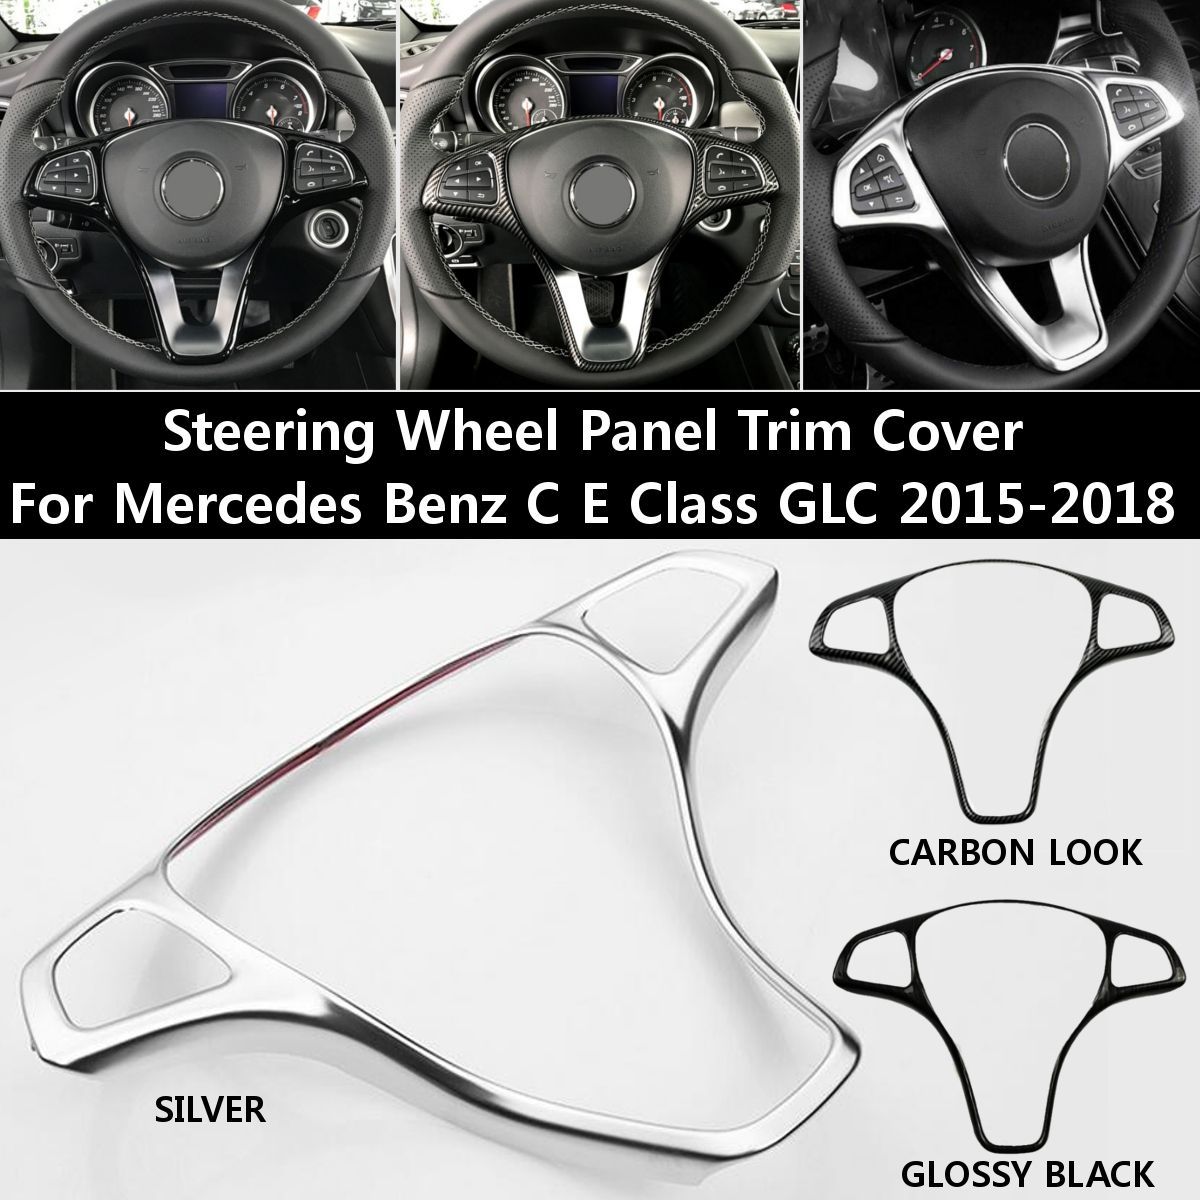 Plastic-Steering-Wheel-Panel-Trim-Cover-For-Mercedes-A-B-C-E-GLA-CLA-GLC-GLS-GLE-Class-W176-W246-W20-1744198